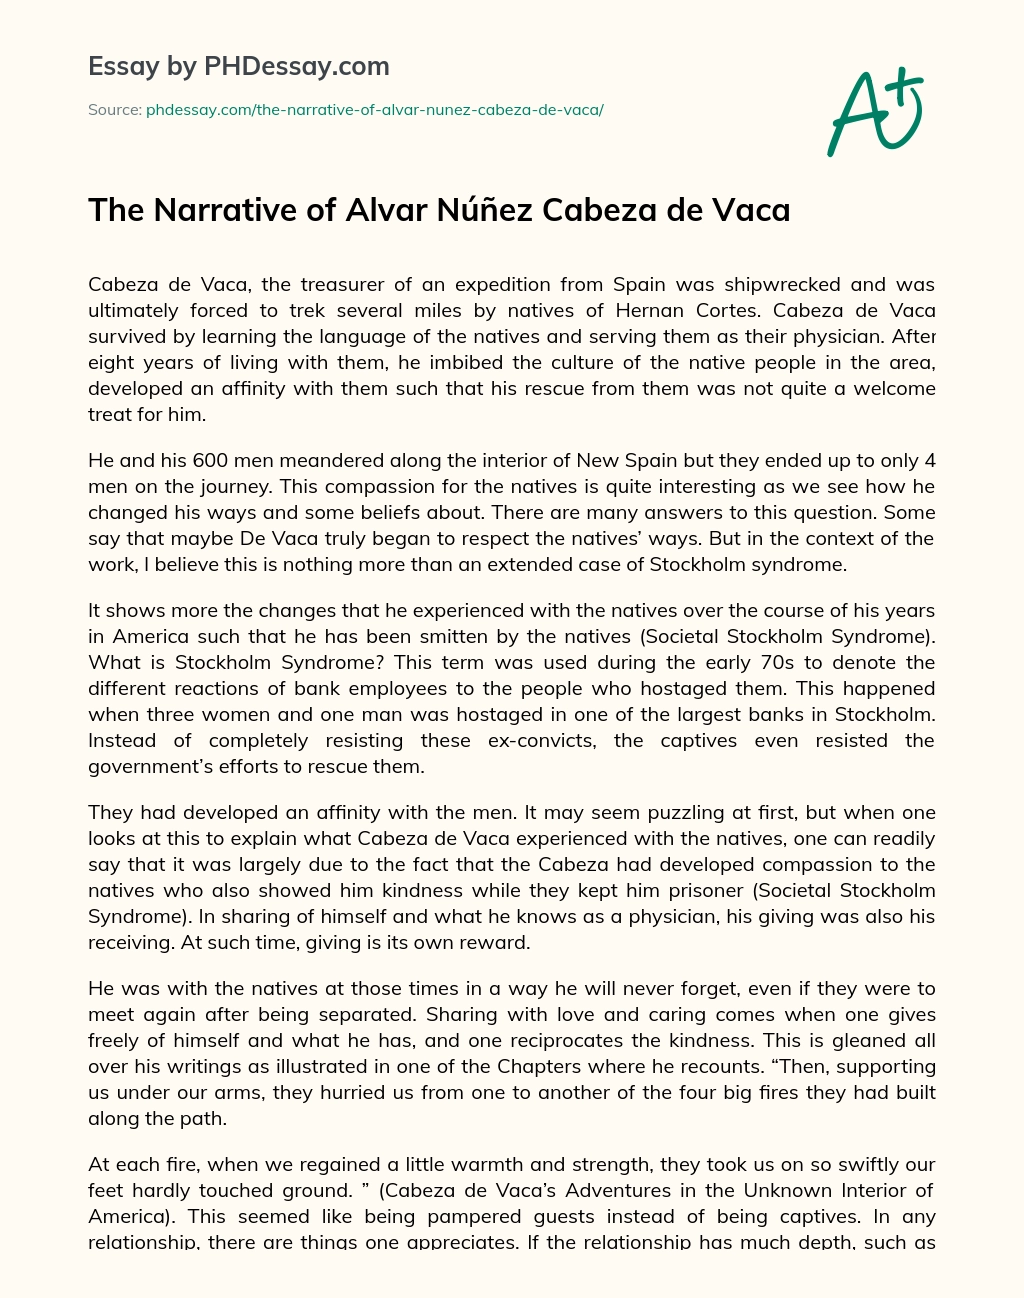 The Narrative of Alvar Núñez Cabeza de Vaca